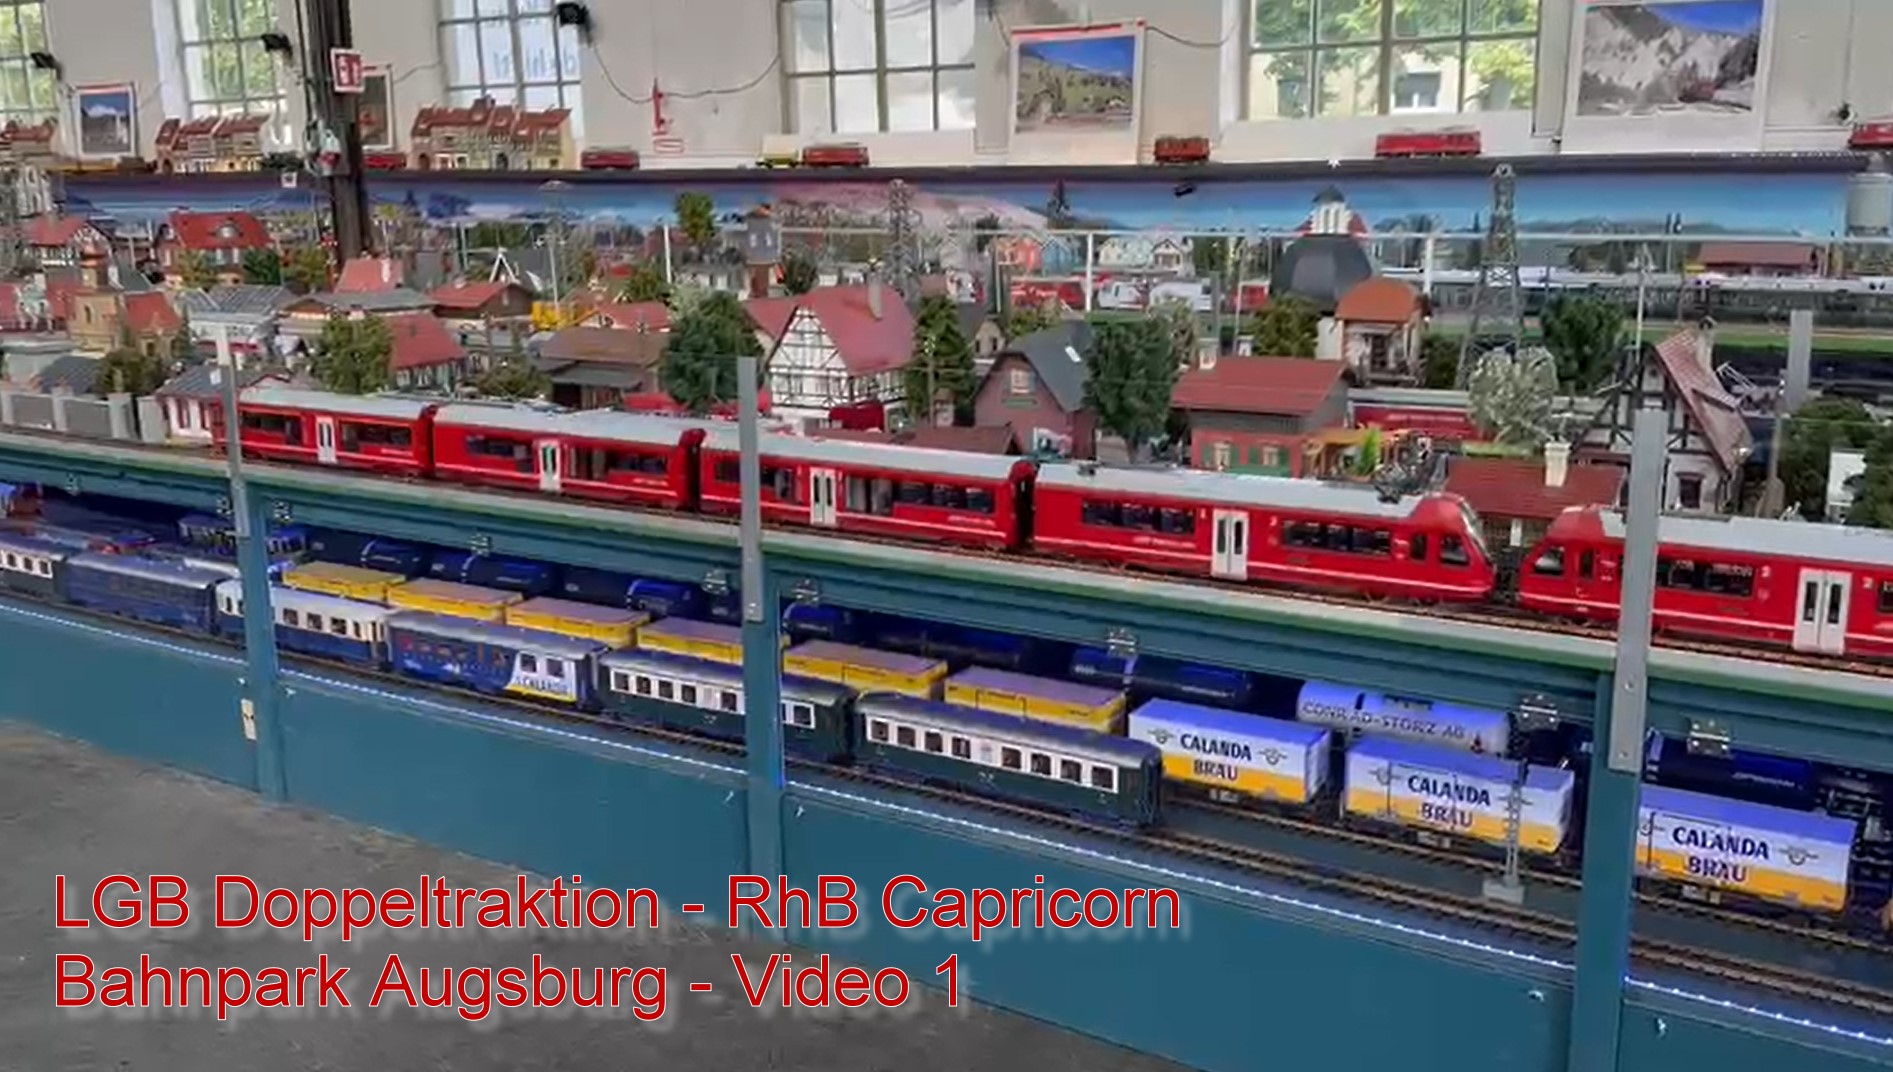 LGB Doppeltrakion - RhB Capricorn - Bahnpark Augsburg - Video 1 